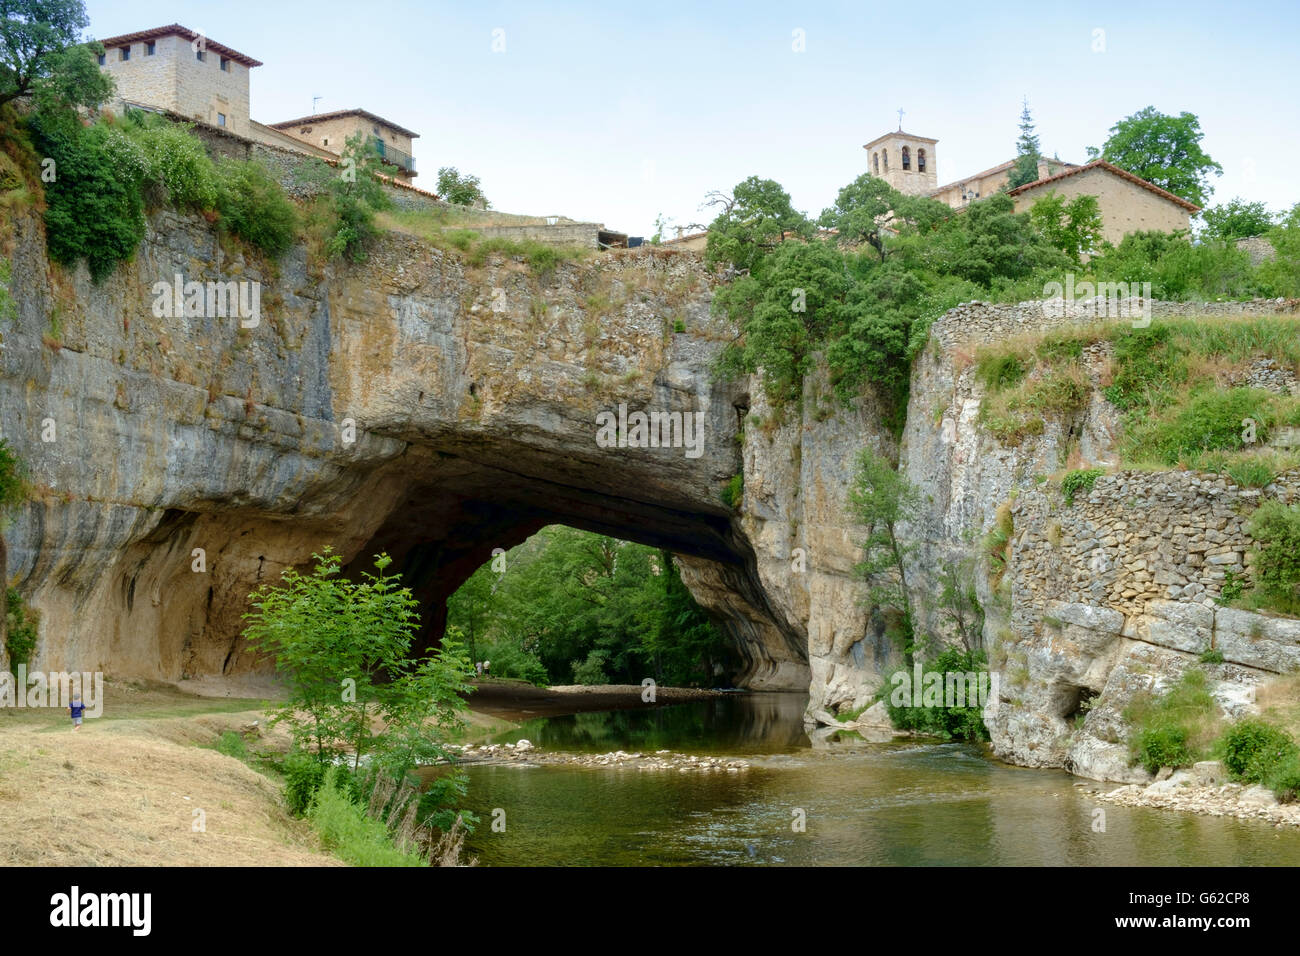 Europe, Spain, Castile & Leon, Puentedey. Puentedey village, the Bridge of God (Puente de Dios) natural rock arch, San Pelayo church and river Nela Stock Photo